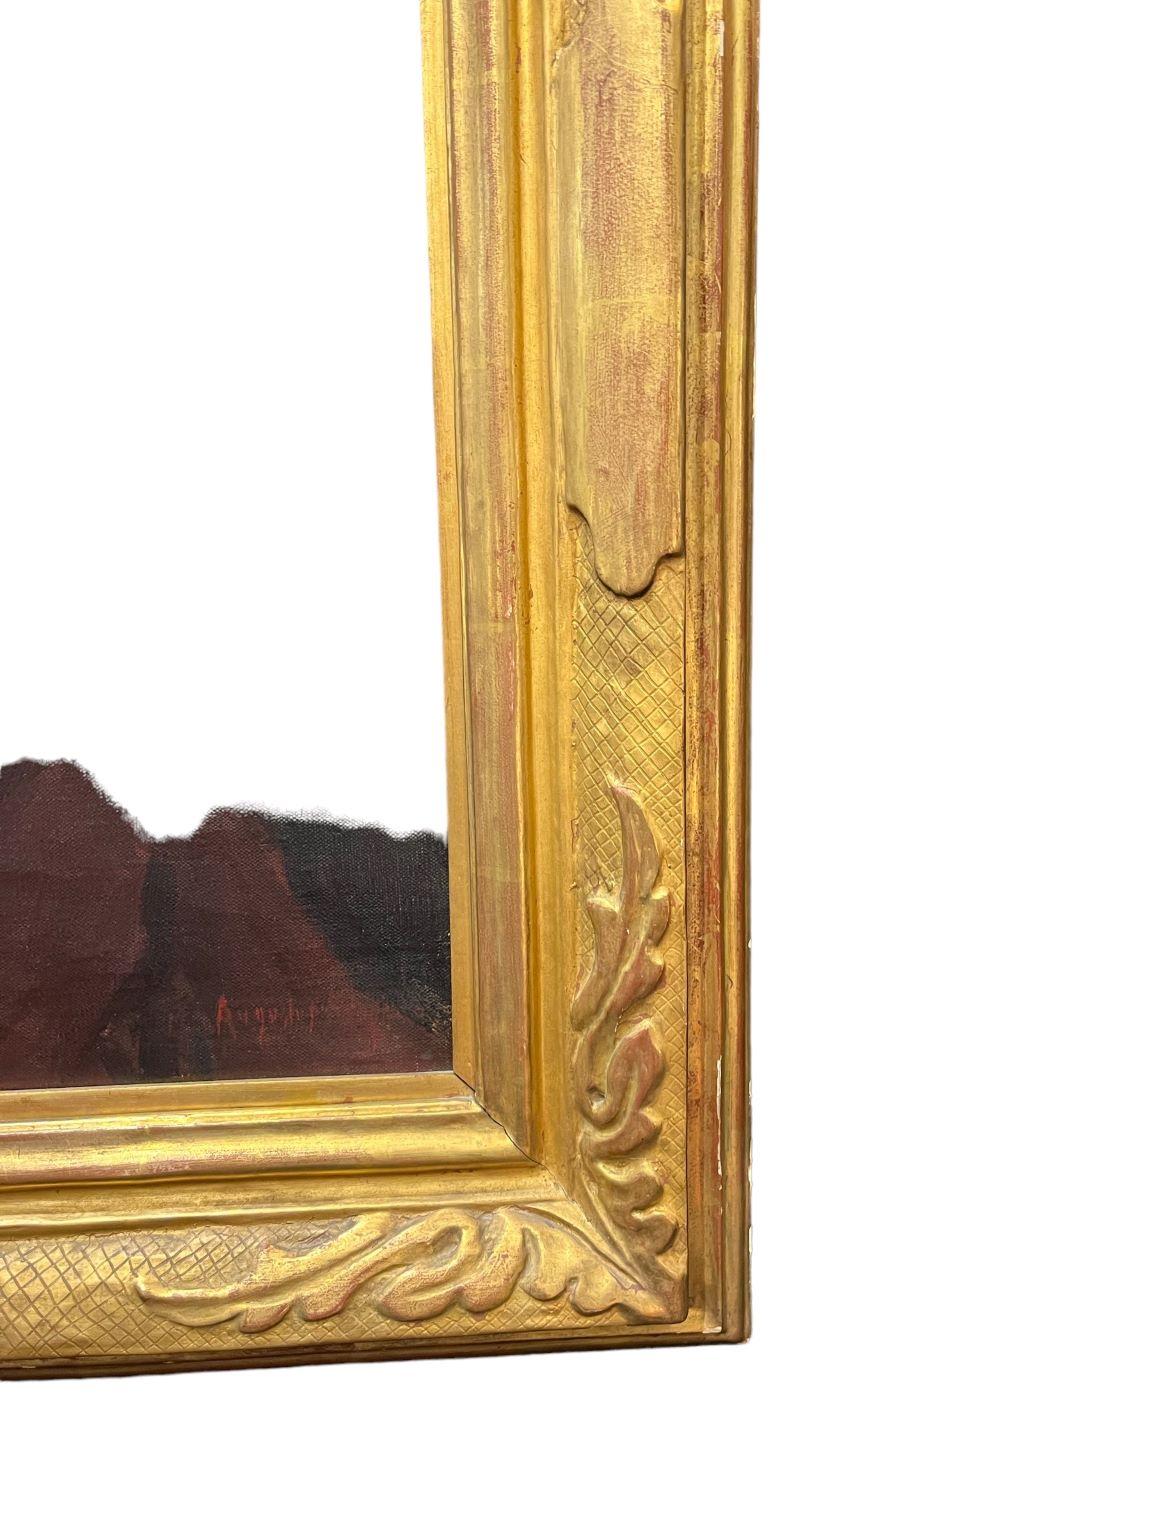 North American Stellar Frederick Harer Gold Gilt Wood Frame Circa 1920-1930’s For Sale